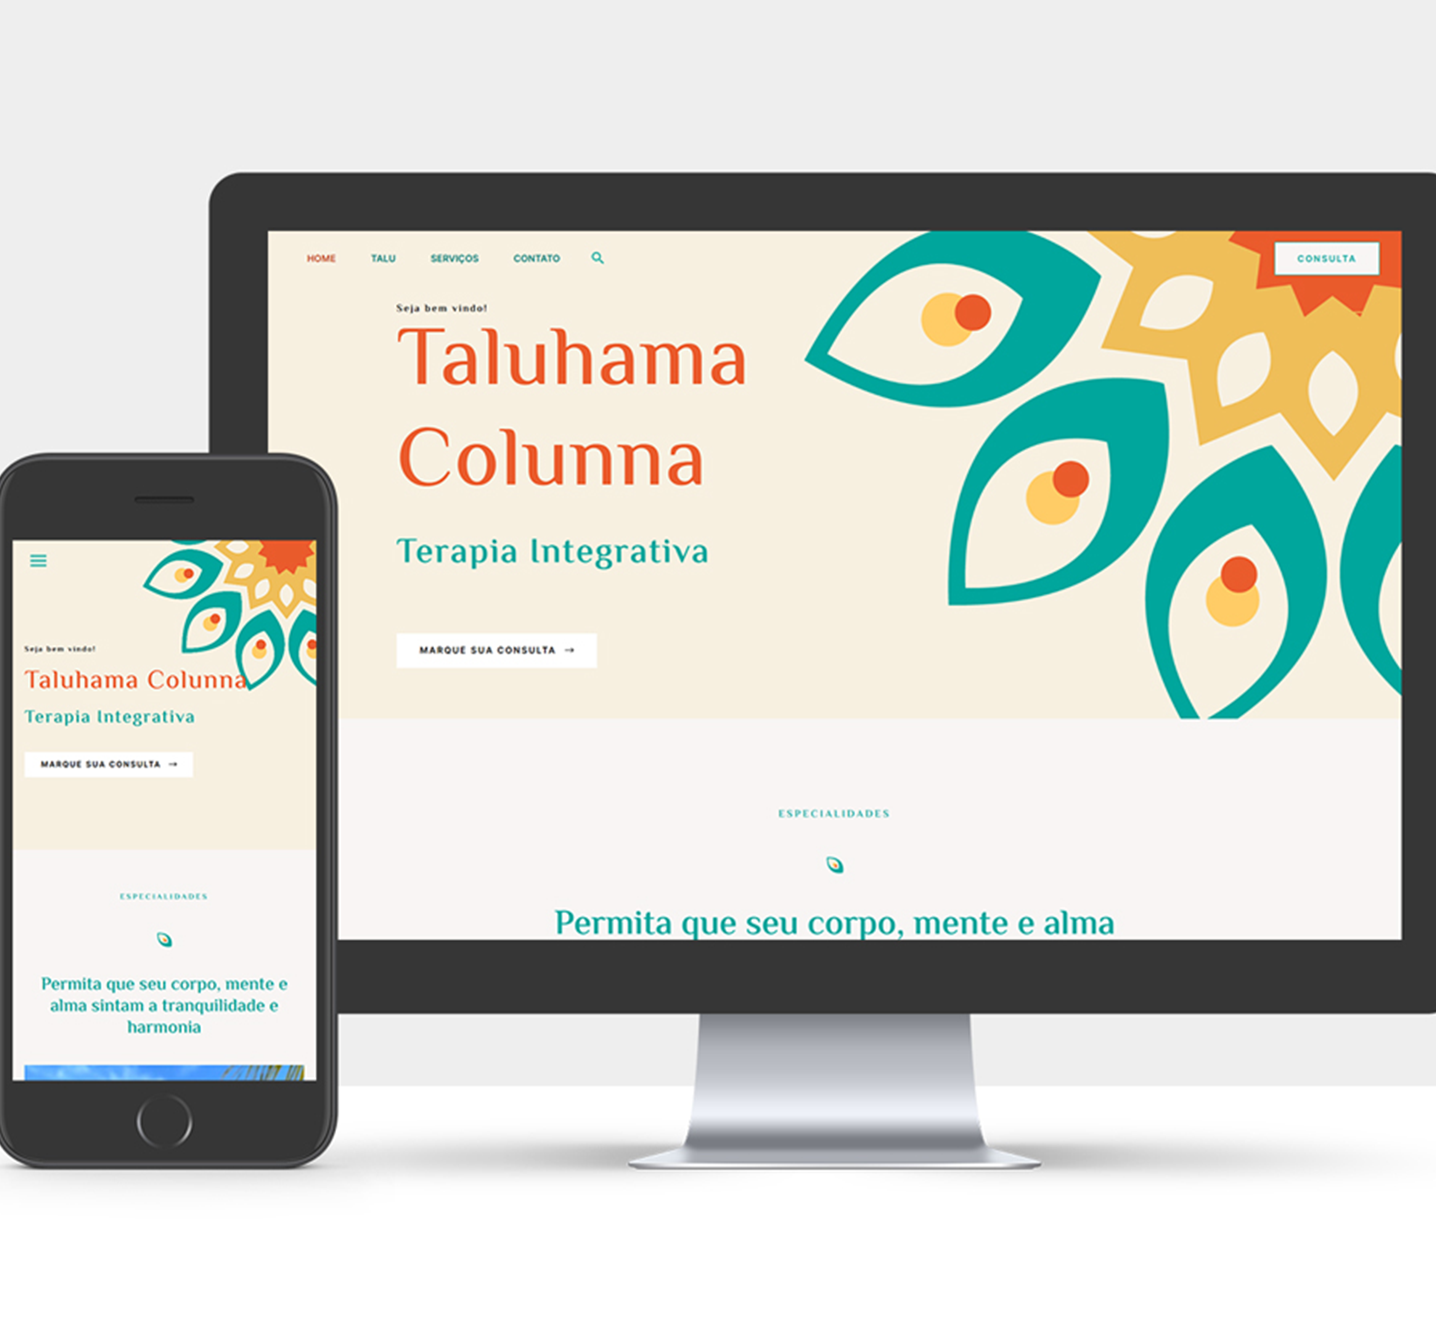 Taluhama Colunna Website made by Design in Art